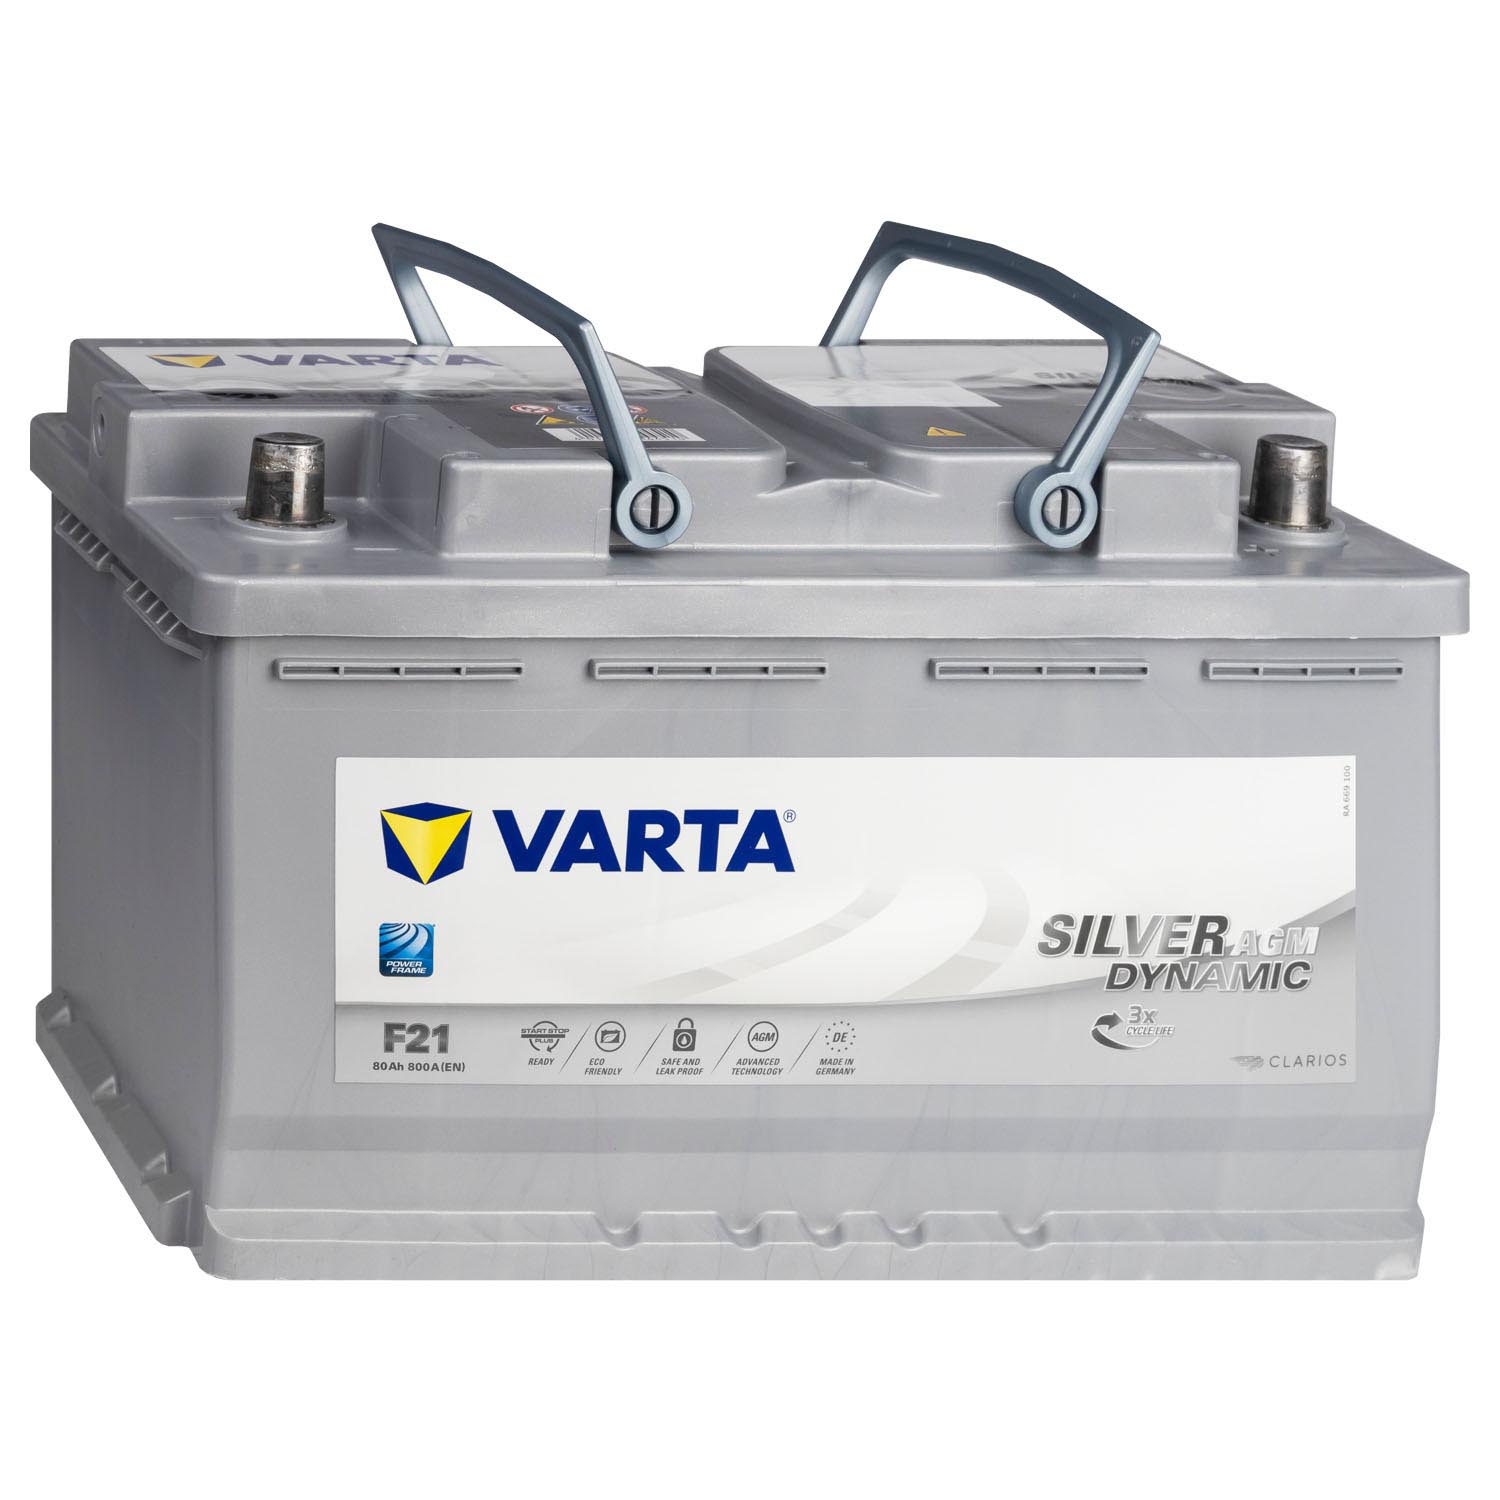  Varta Silver Dynamic AGM F21 12V 80Ah 800A  Autobatterie Batterie 580901080D852